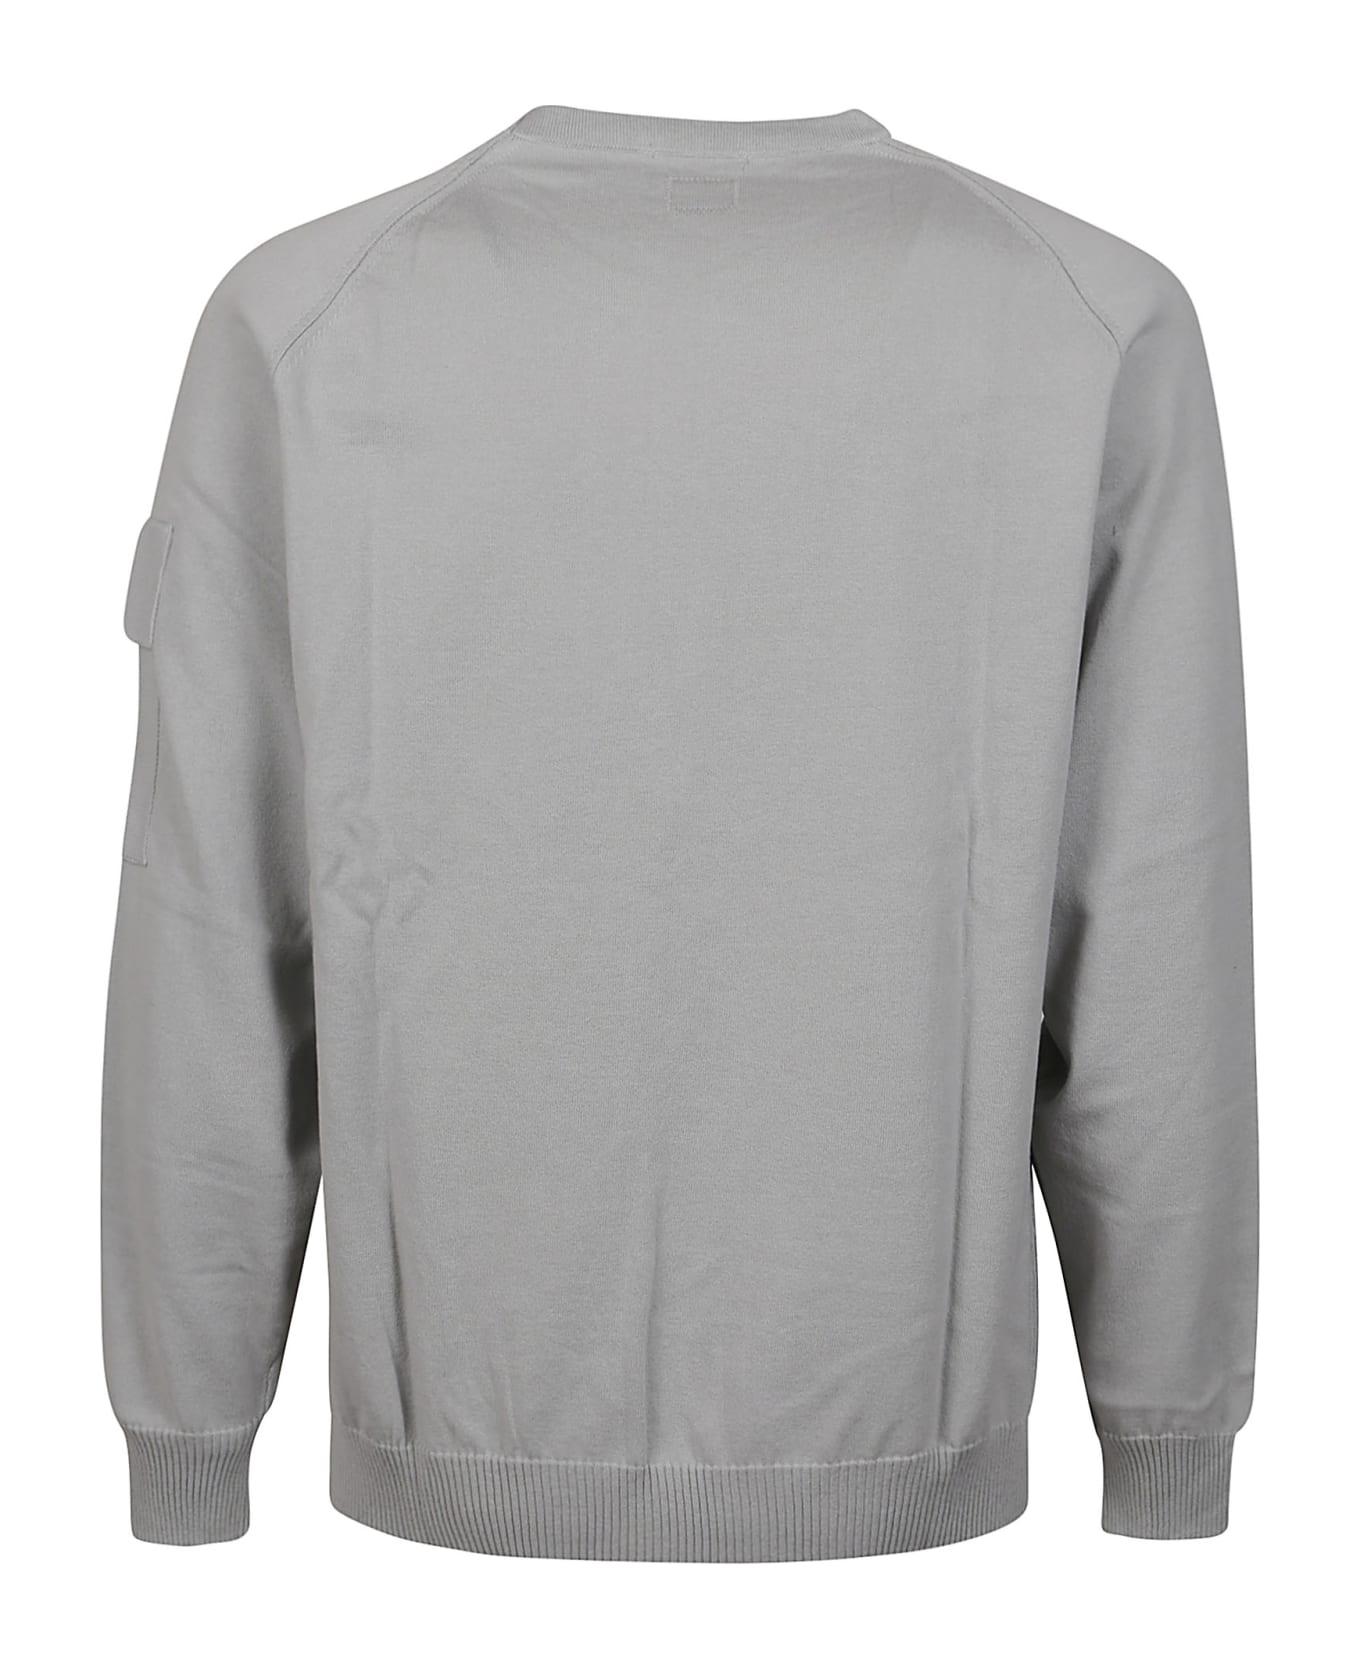 C.P. Company Metropolis Stretch Pocket Sweater - Drizzle Grey